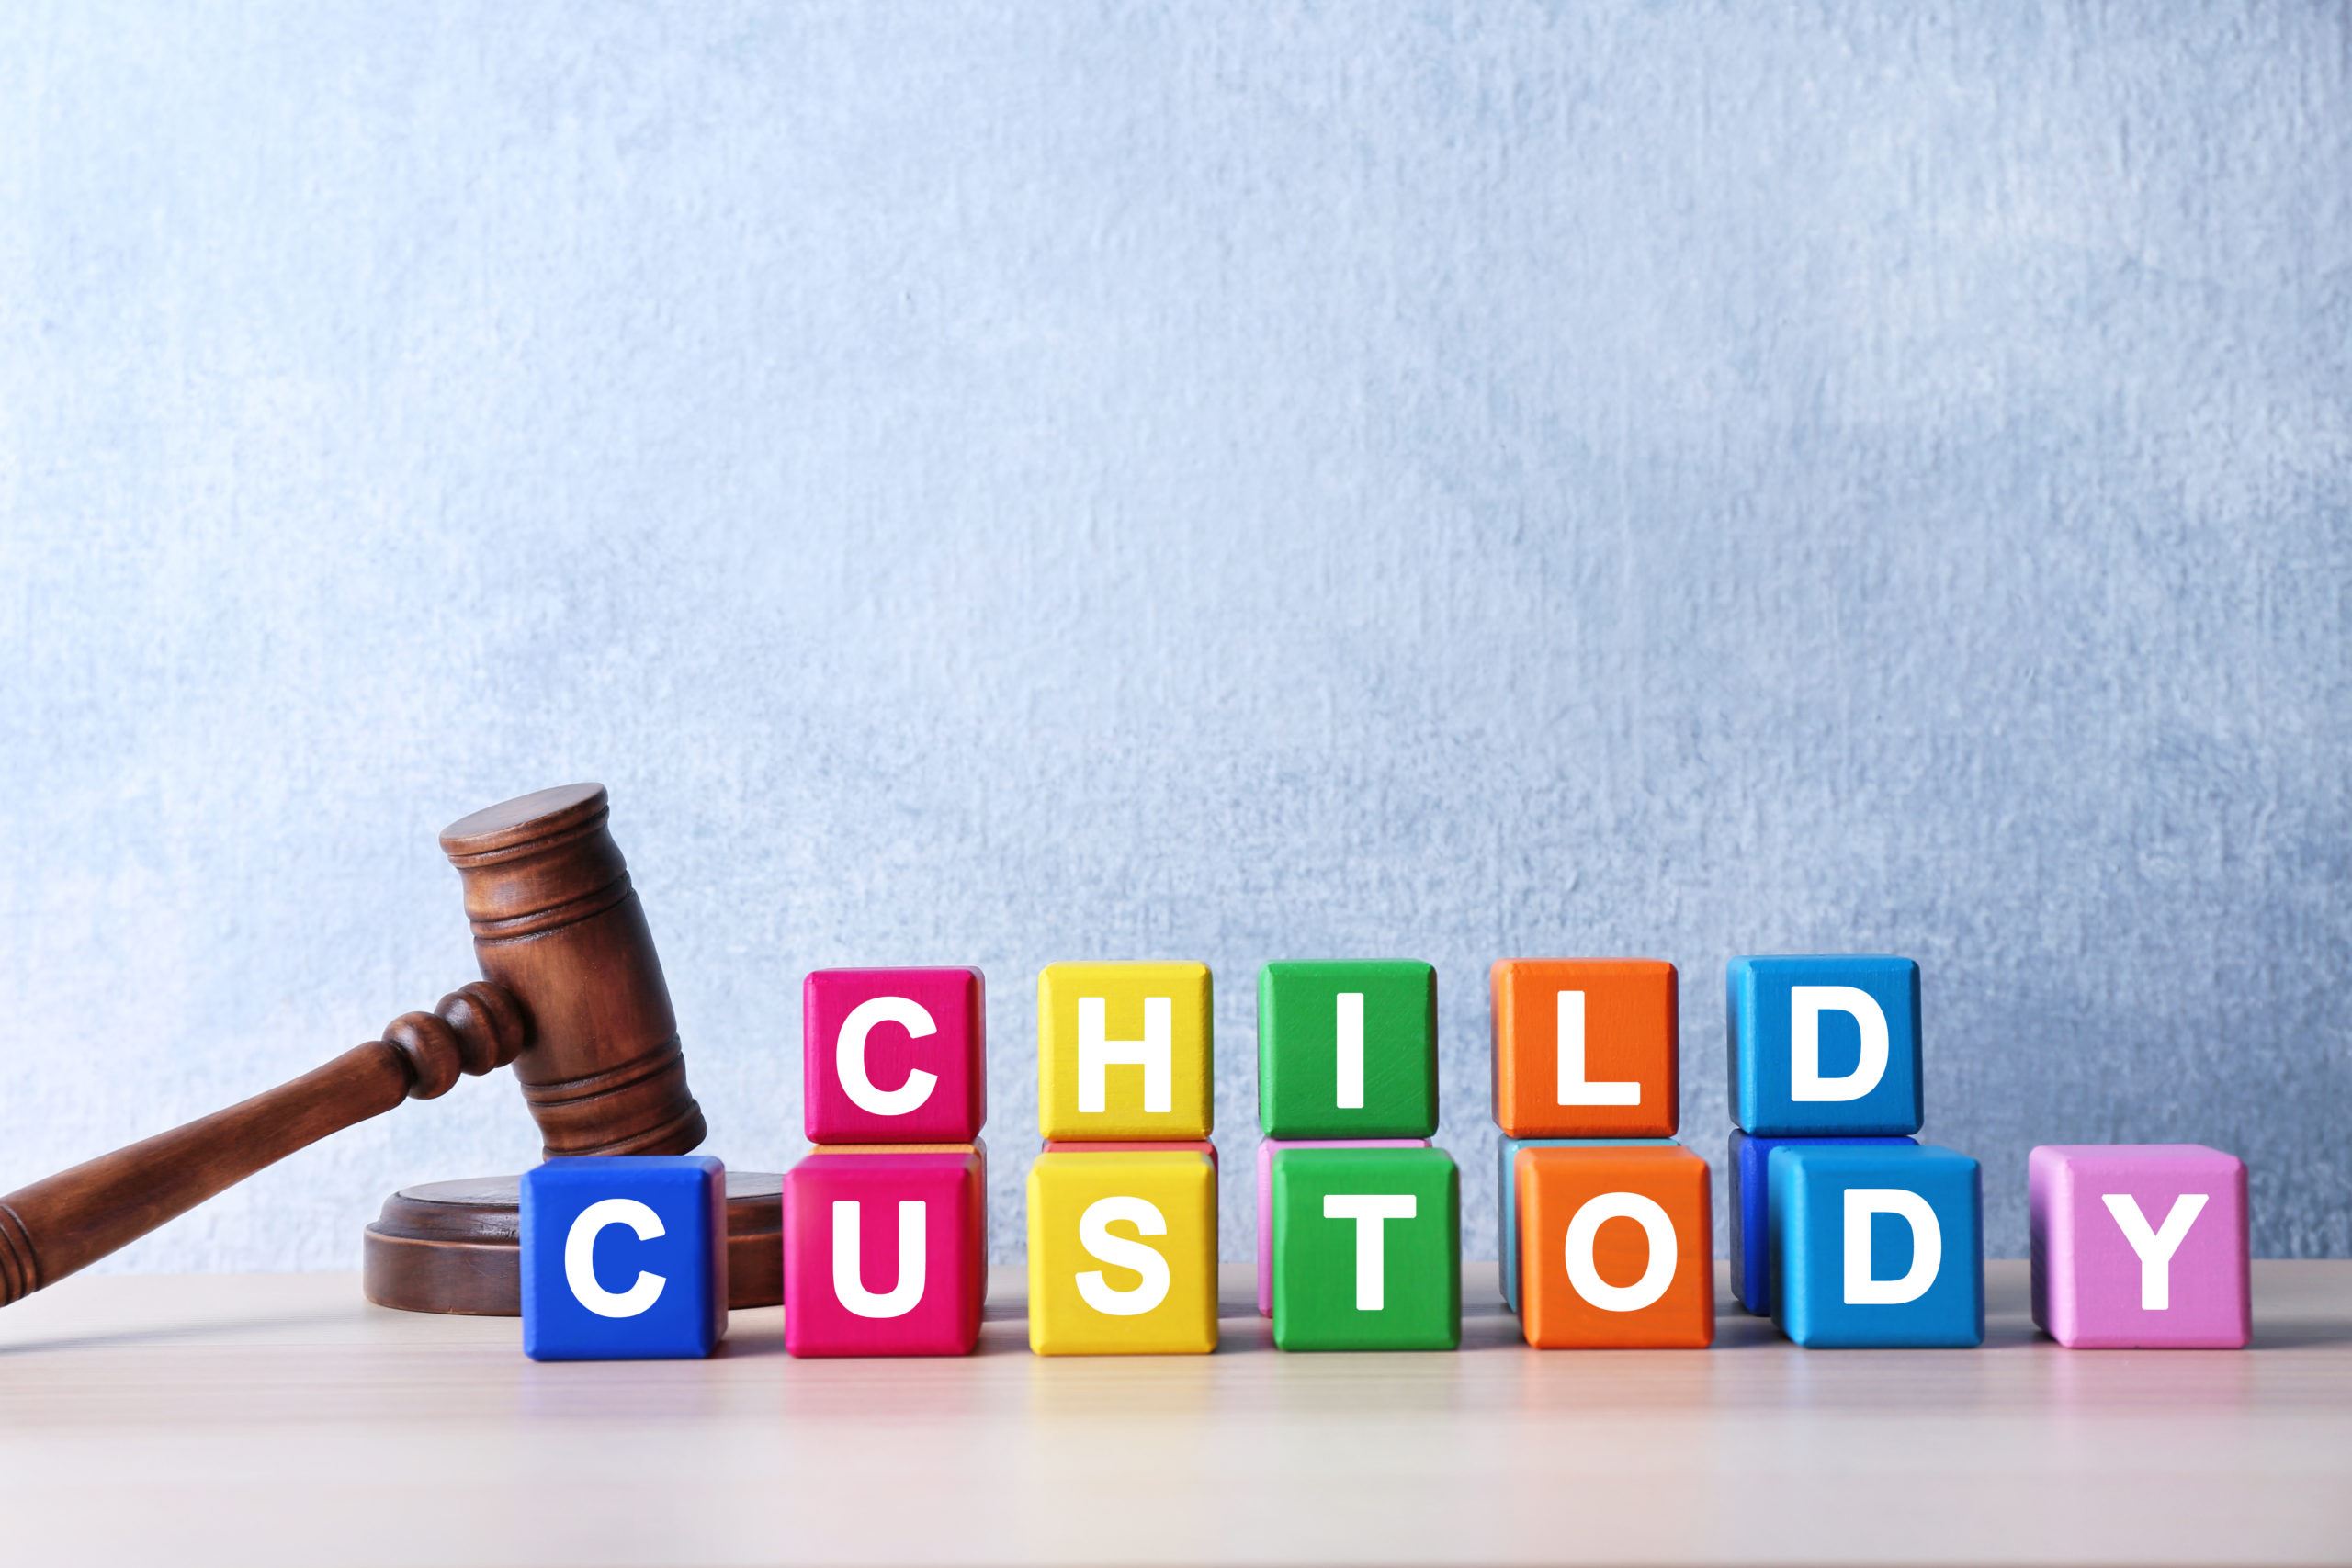 Child Custody building blocks, wooden gavel